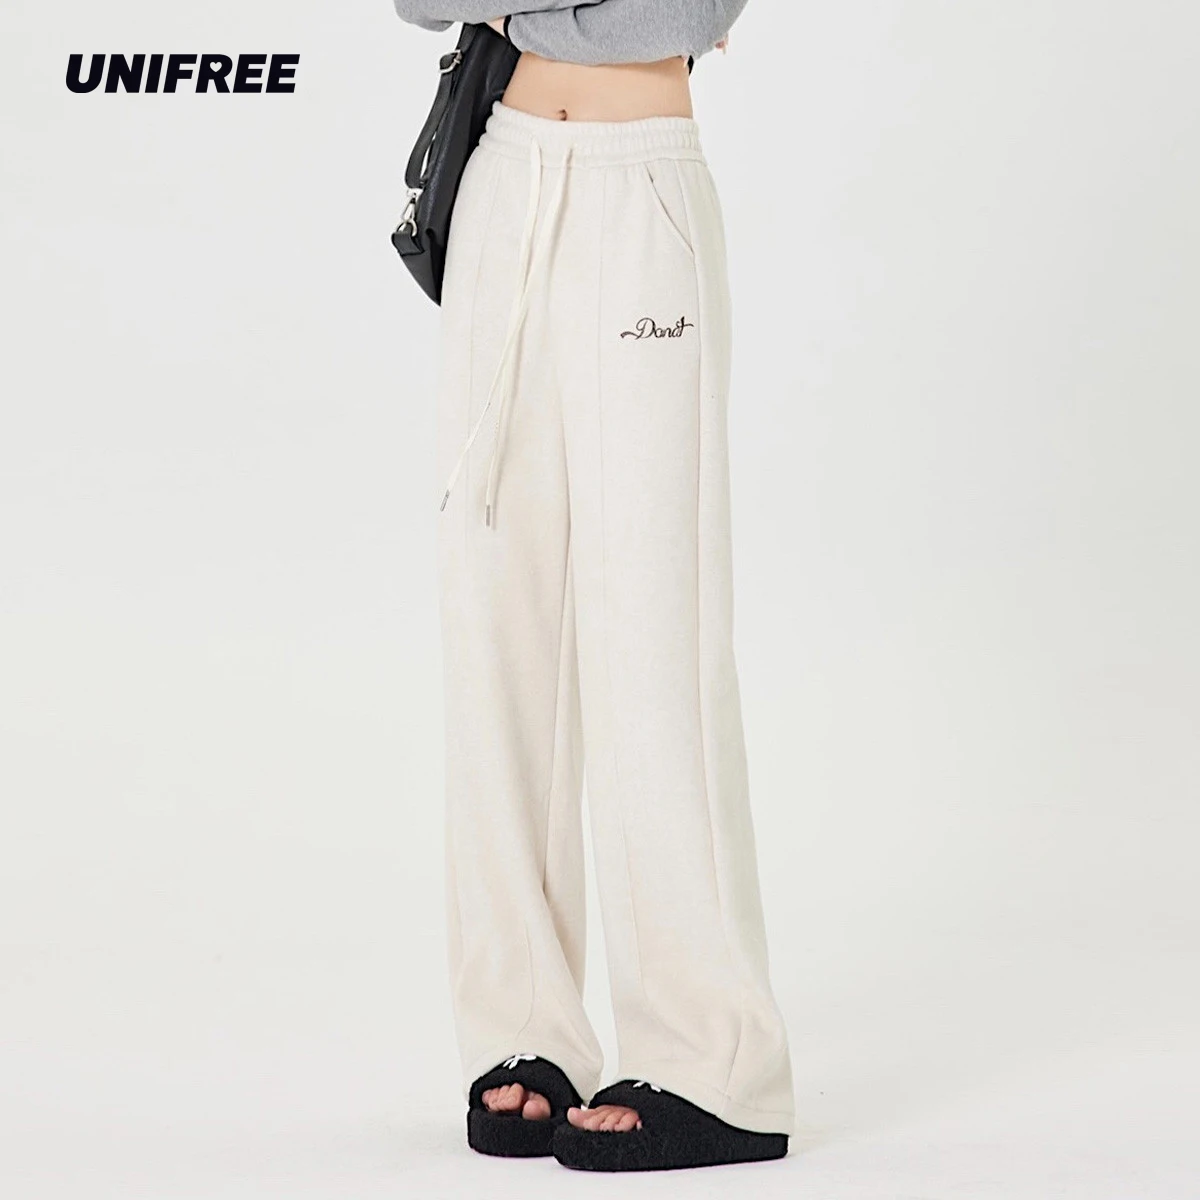 

UNIFREE Streetwear Baggy Pants Women Straight Leg Drawstring Elastic Waist Casual Oversize Sports Hip Hop Trousers